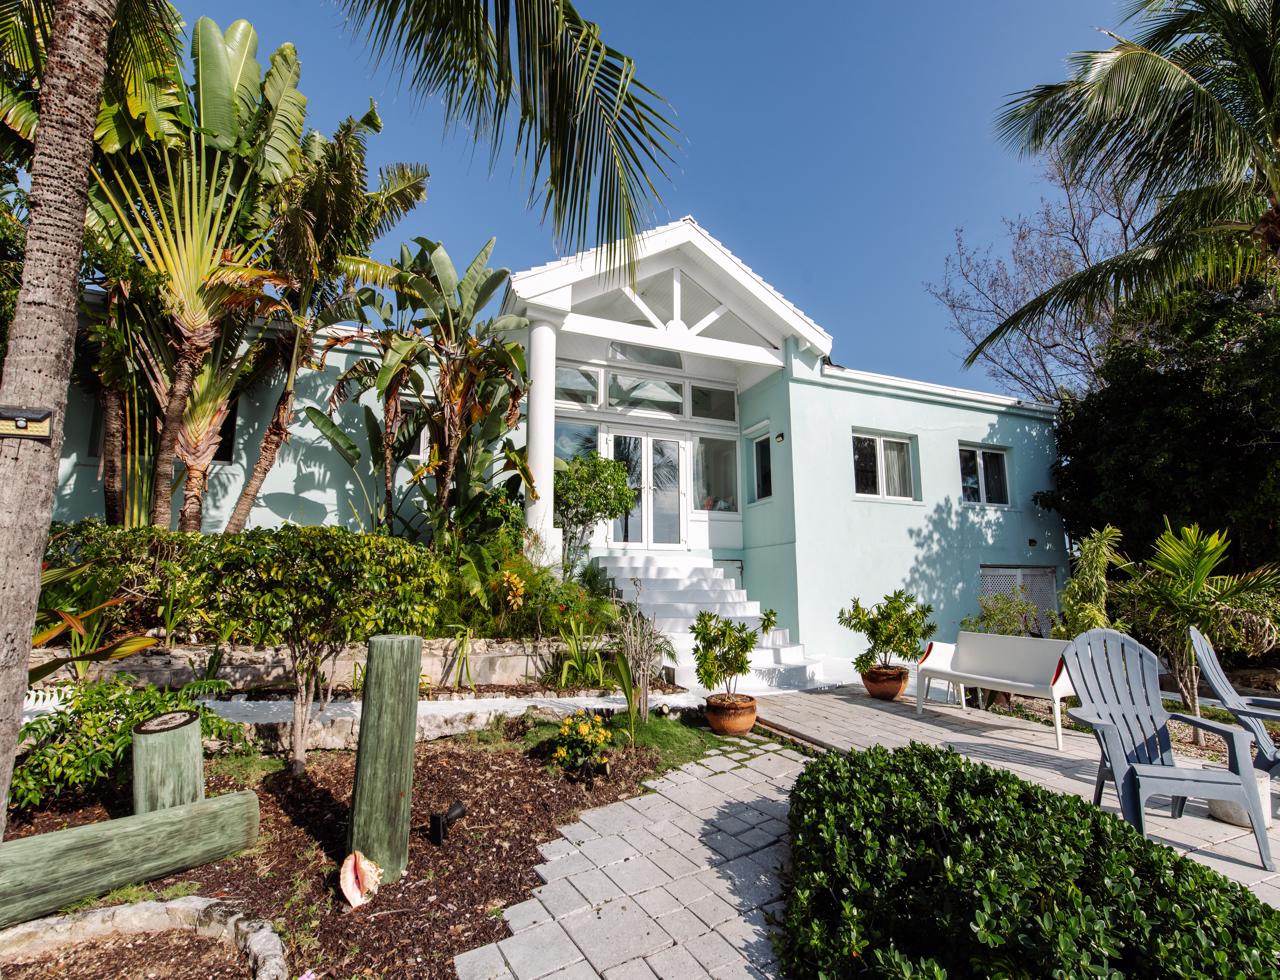 Bahamas 2 acre private island